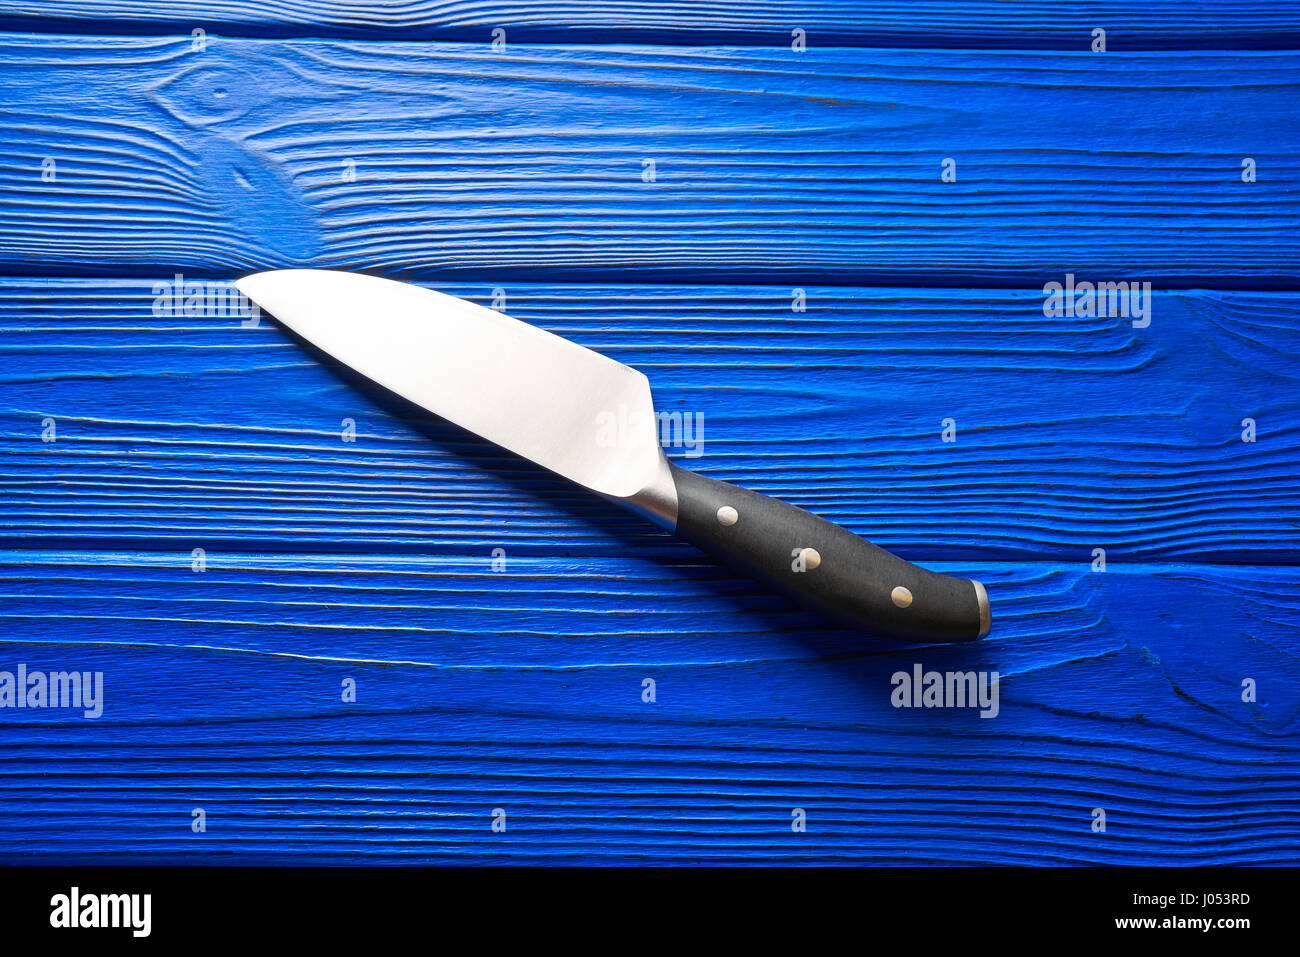 https://c8.alamy.com/comp/J053RD/chef-tools-black-knife-on-a-blue-wooden-background-J053RD.jpg